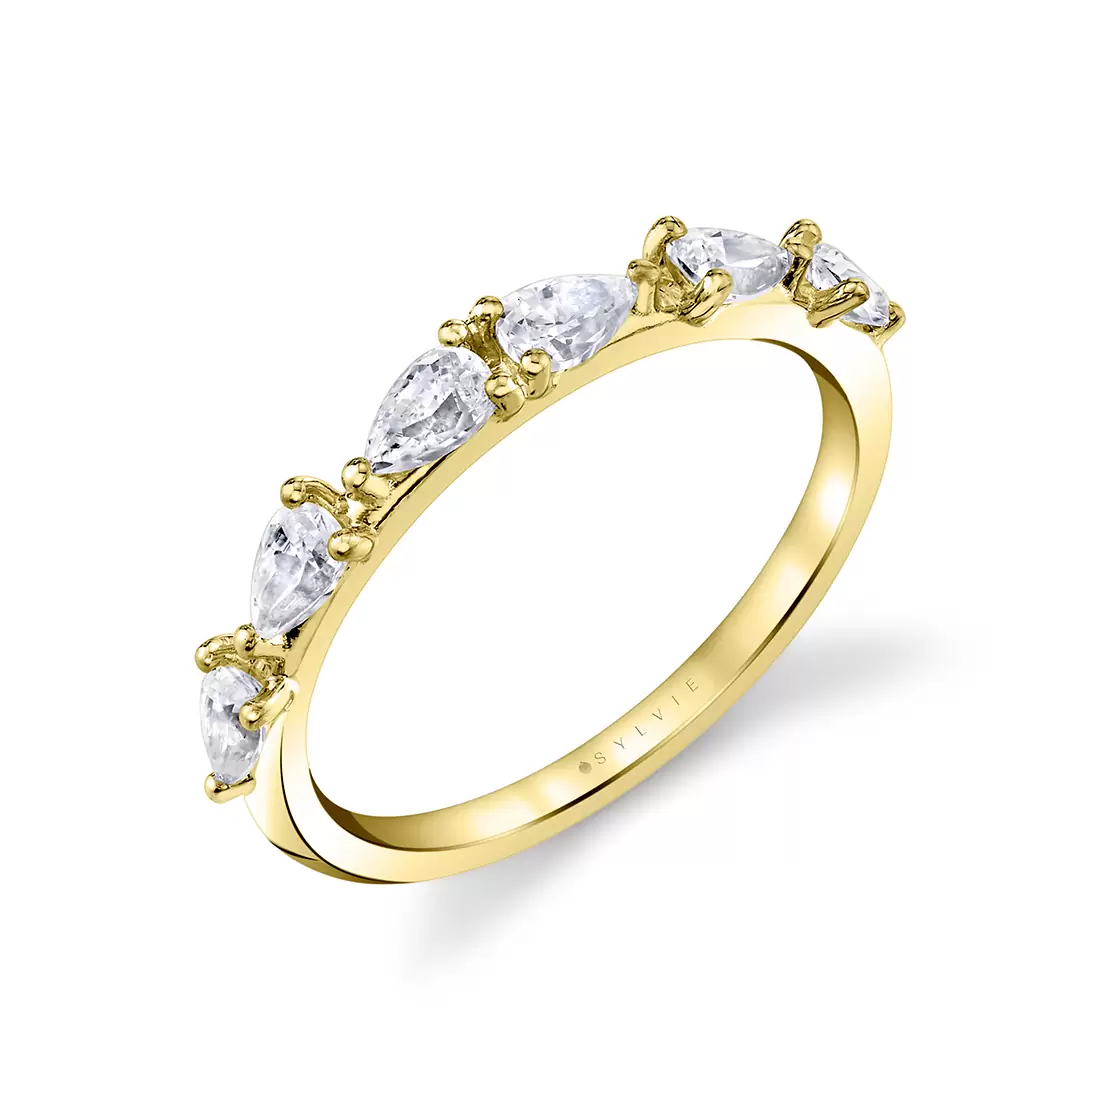 Yellow gold, pear-shaped diamond wedding ring